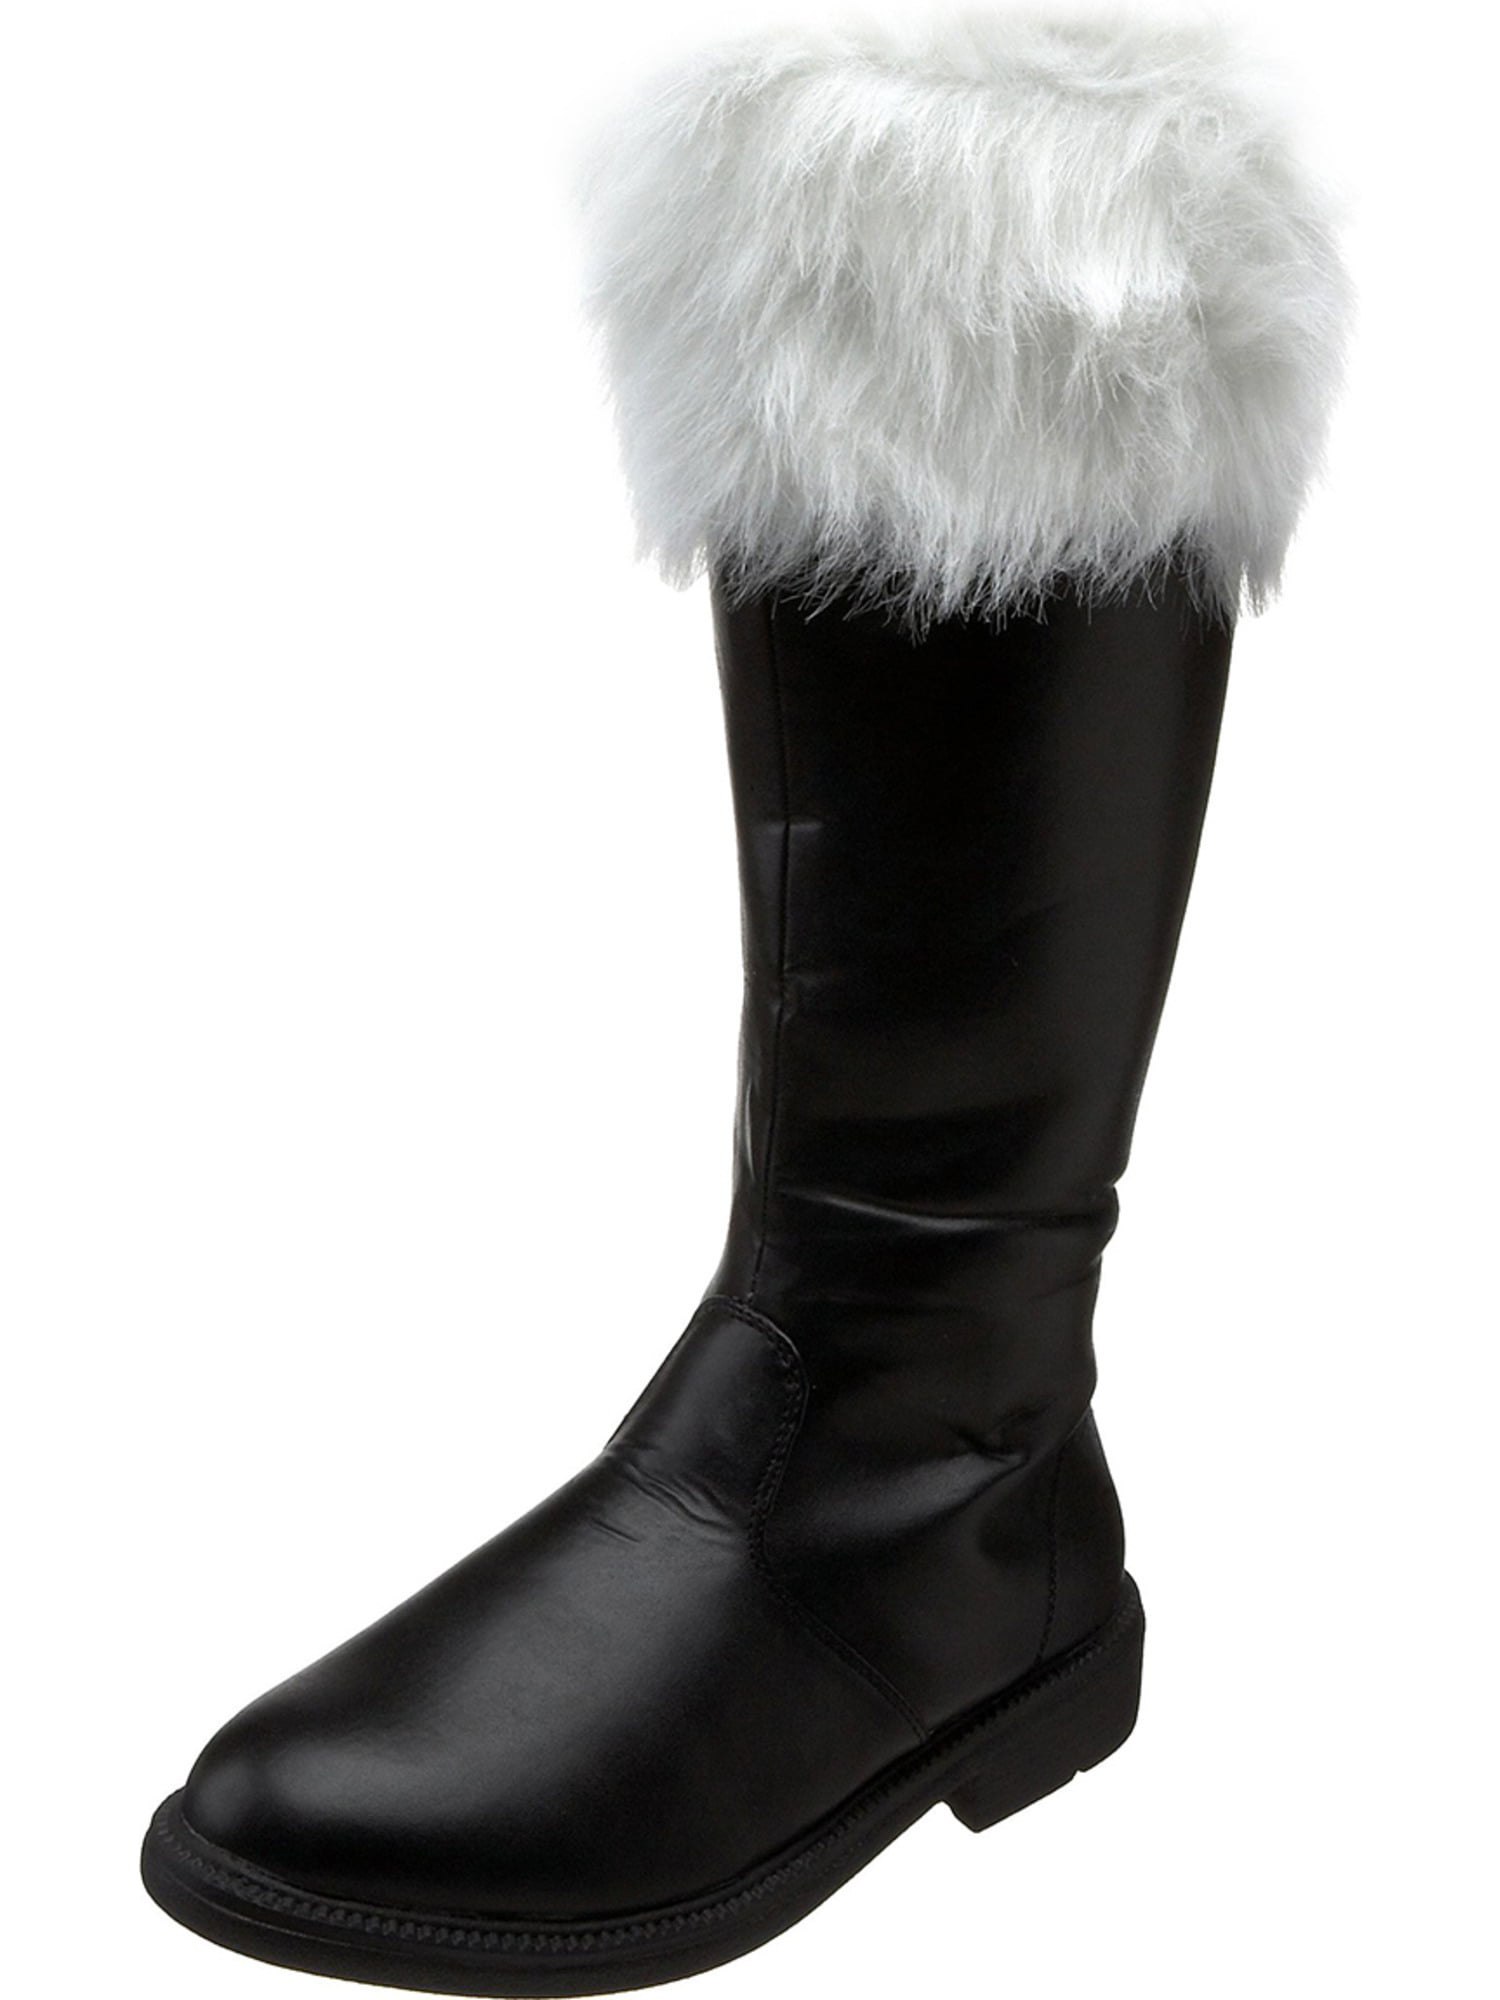 Mens Santa Boots Black Costume Shoes Christmas White Fur 1 Inch Heel ...